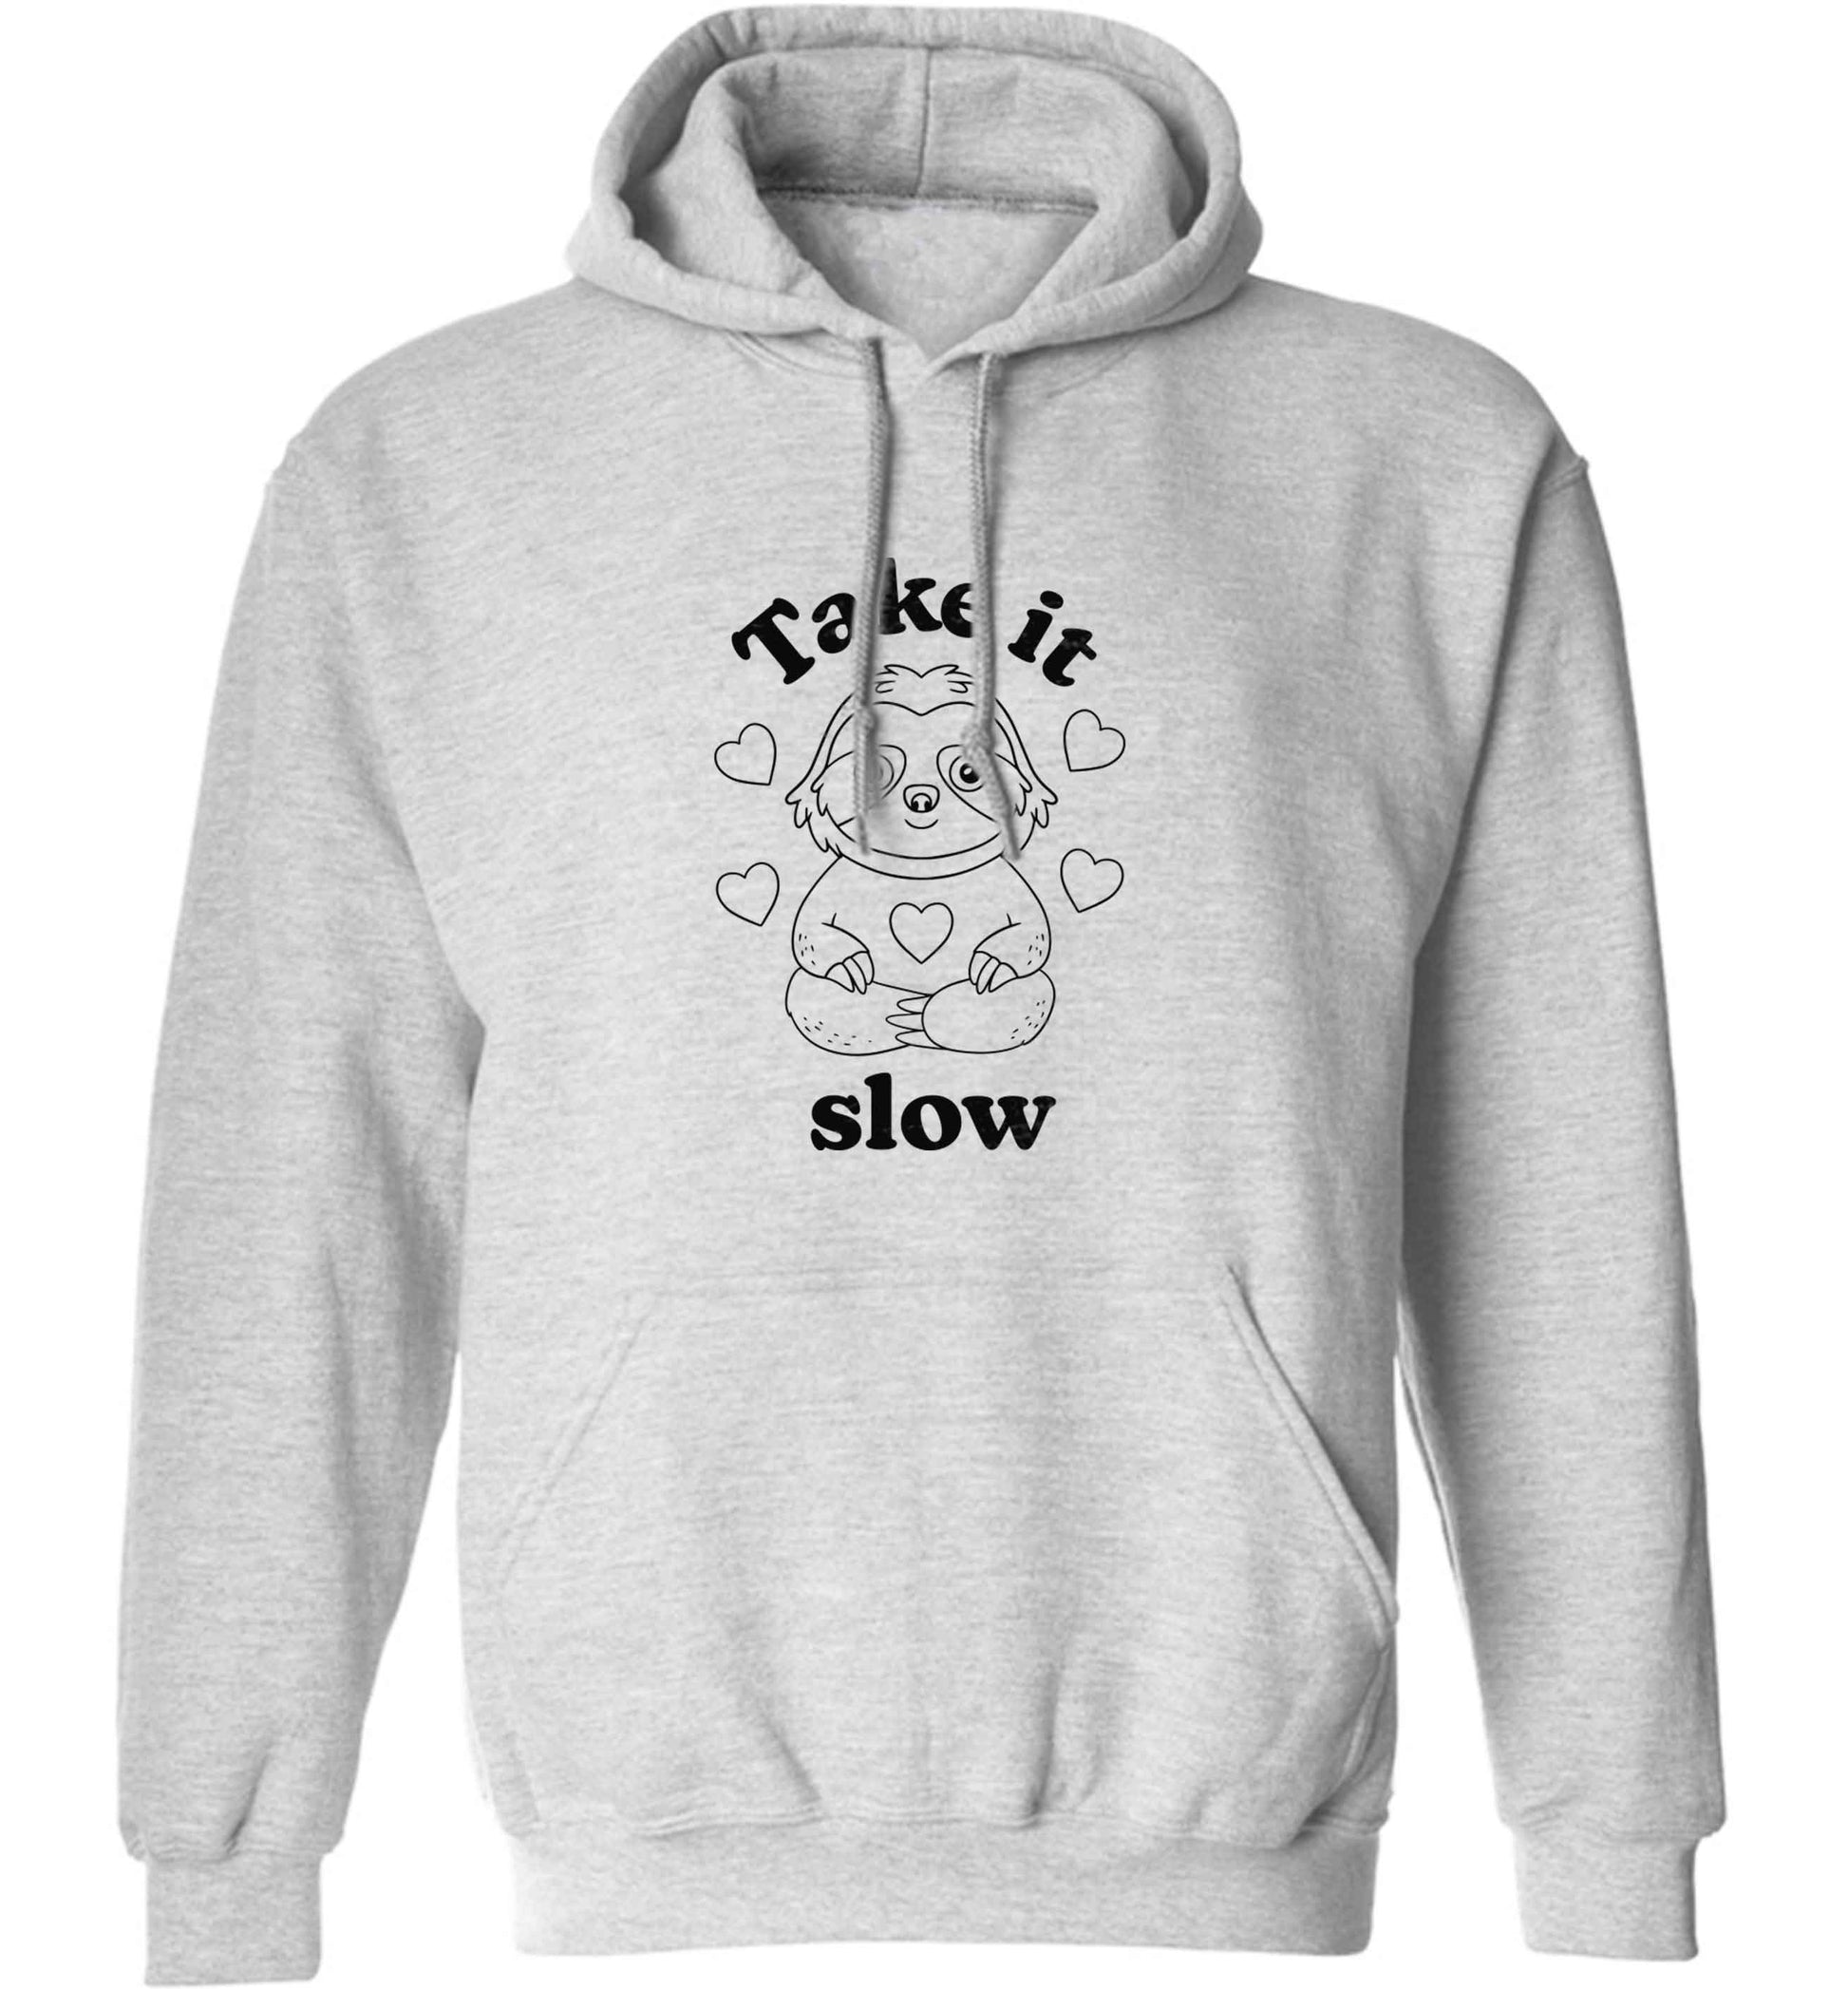 Take it slow adults unisex grey hoodie 2XL